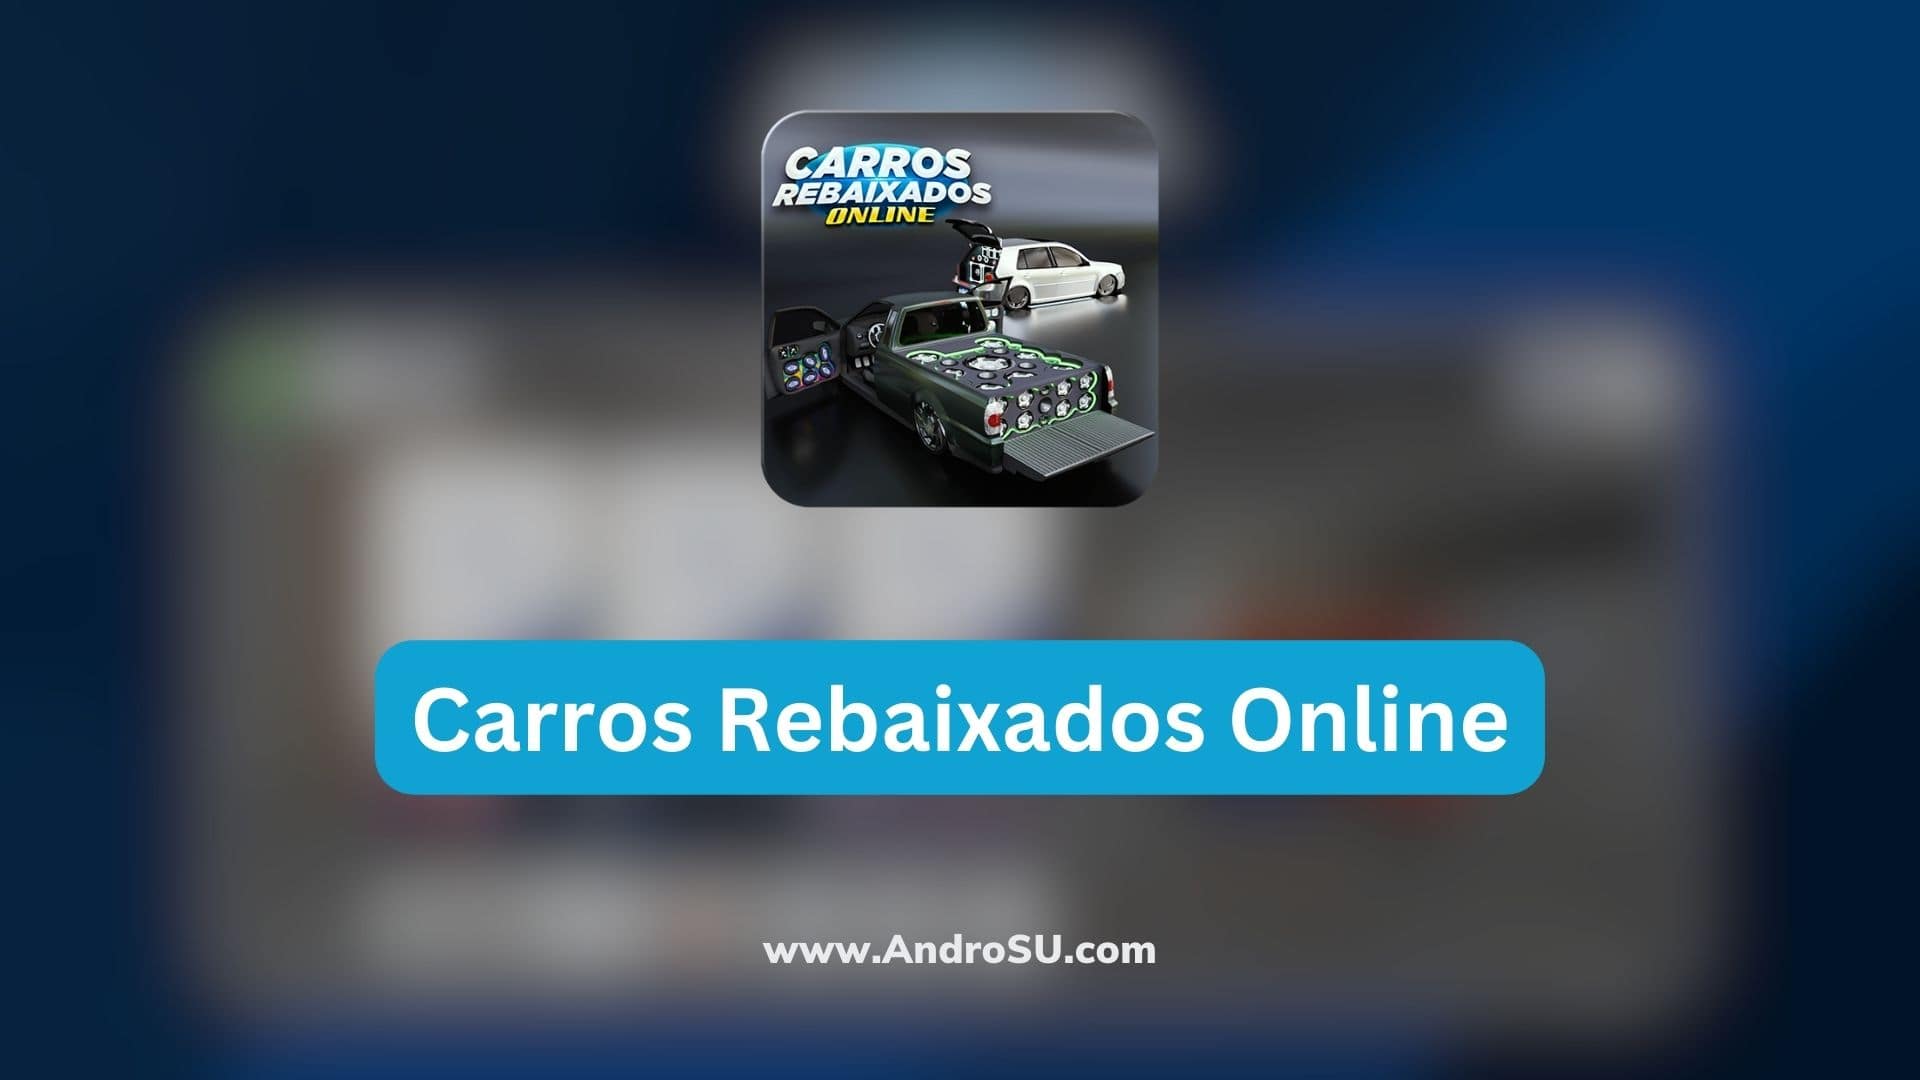 Carros Rebaixados Online APK - Free download app for Android